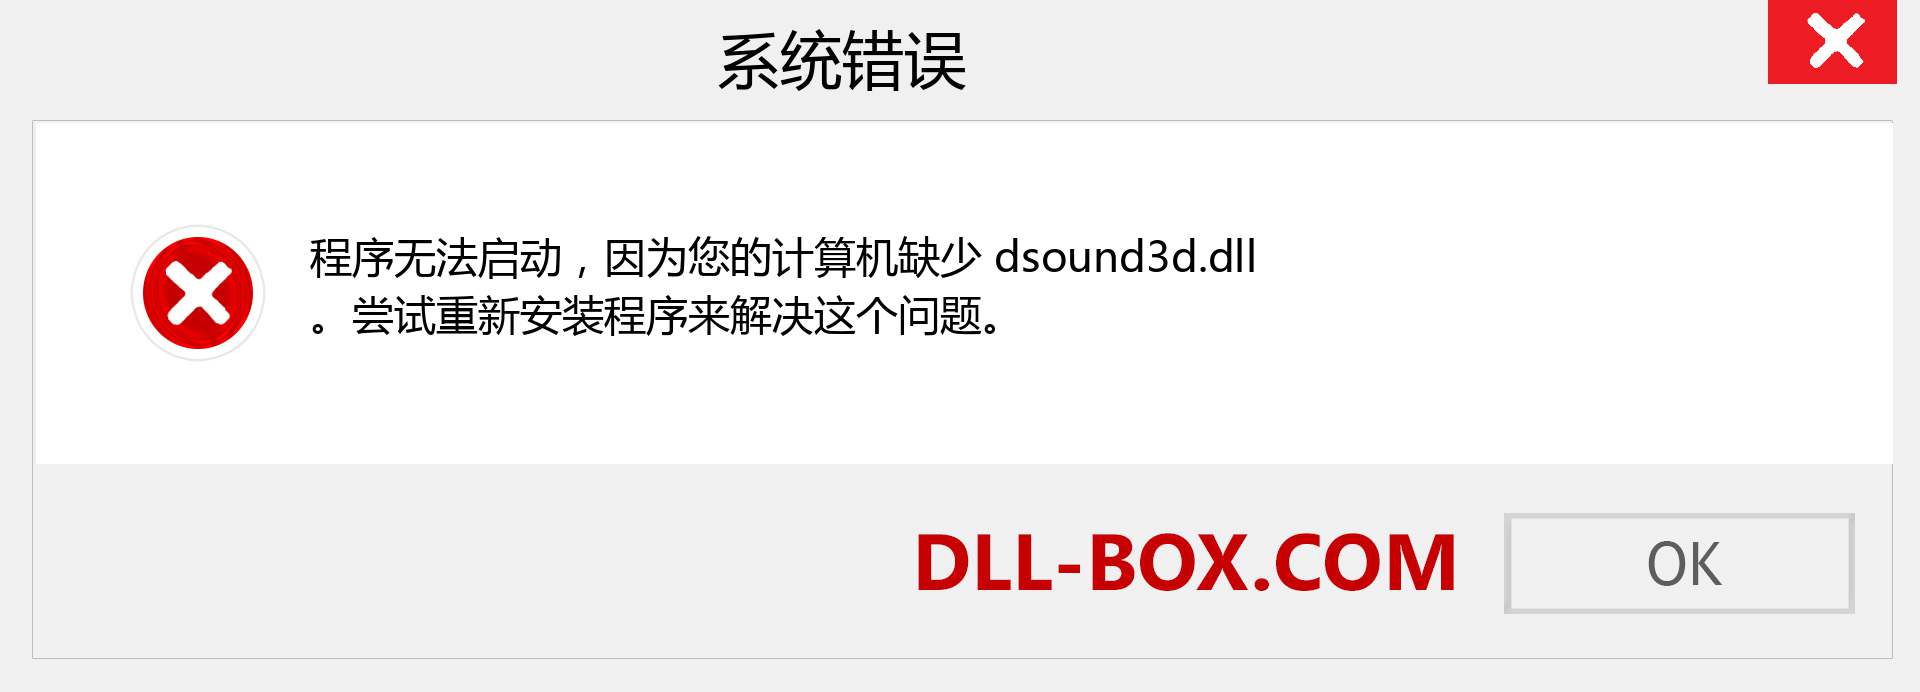 dsound3d.dll 文件丢失？。 适用于 Windows 7、8、10 的下载 - 修复 Windows、照片、图像上的 dsound3d dll 丢失错误